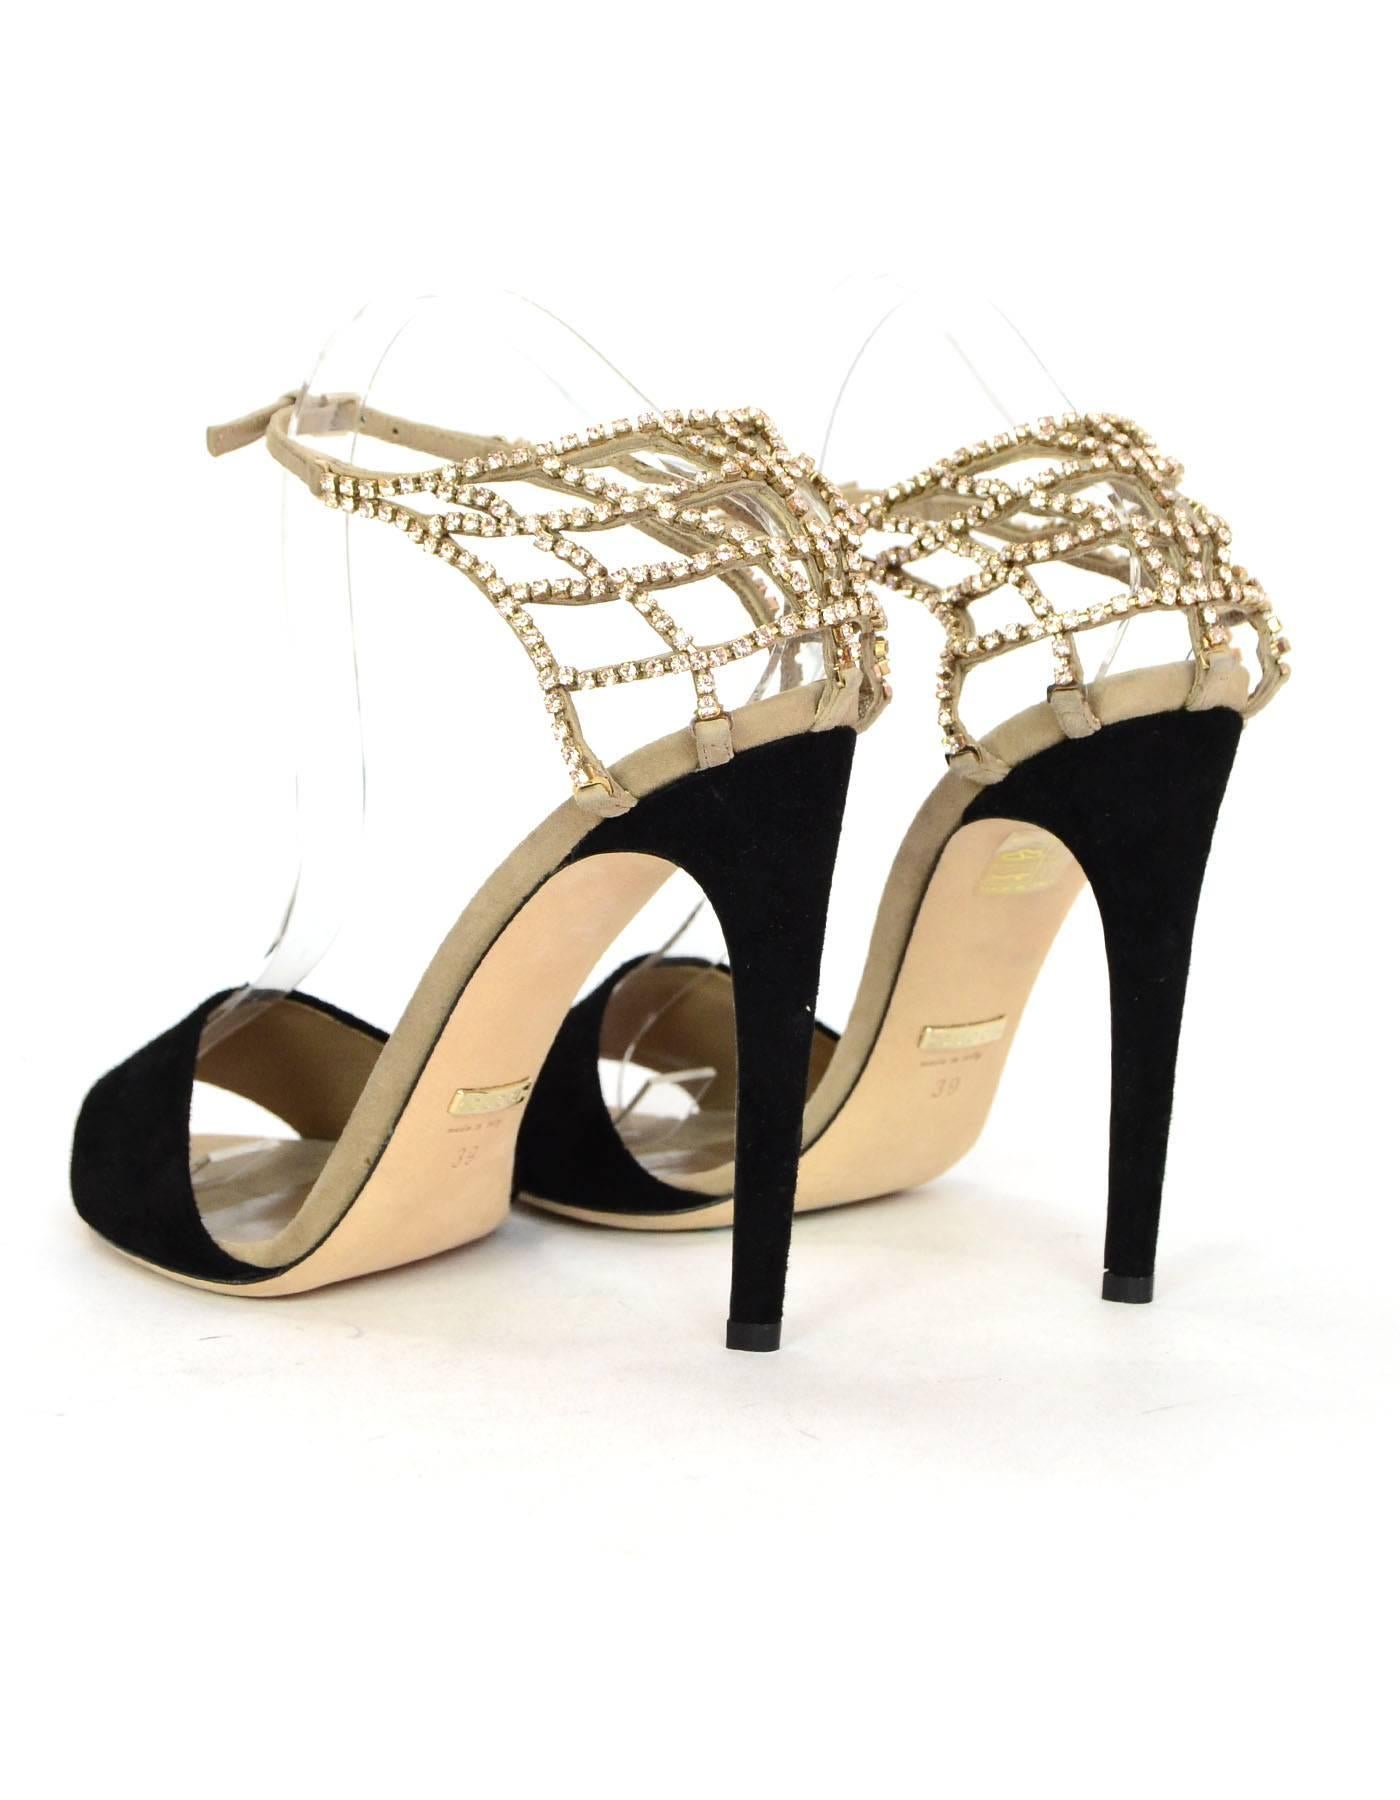 Women's Gucci Black & Beige Suede & Crystal Sandals Sz 39 NEW